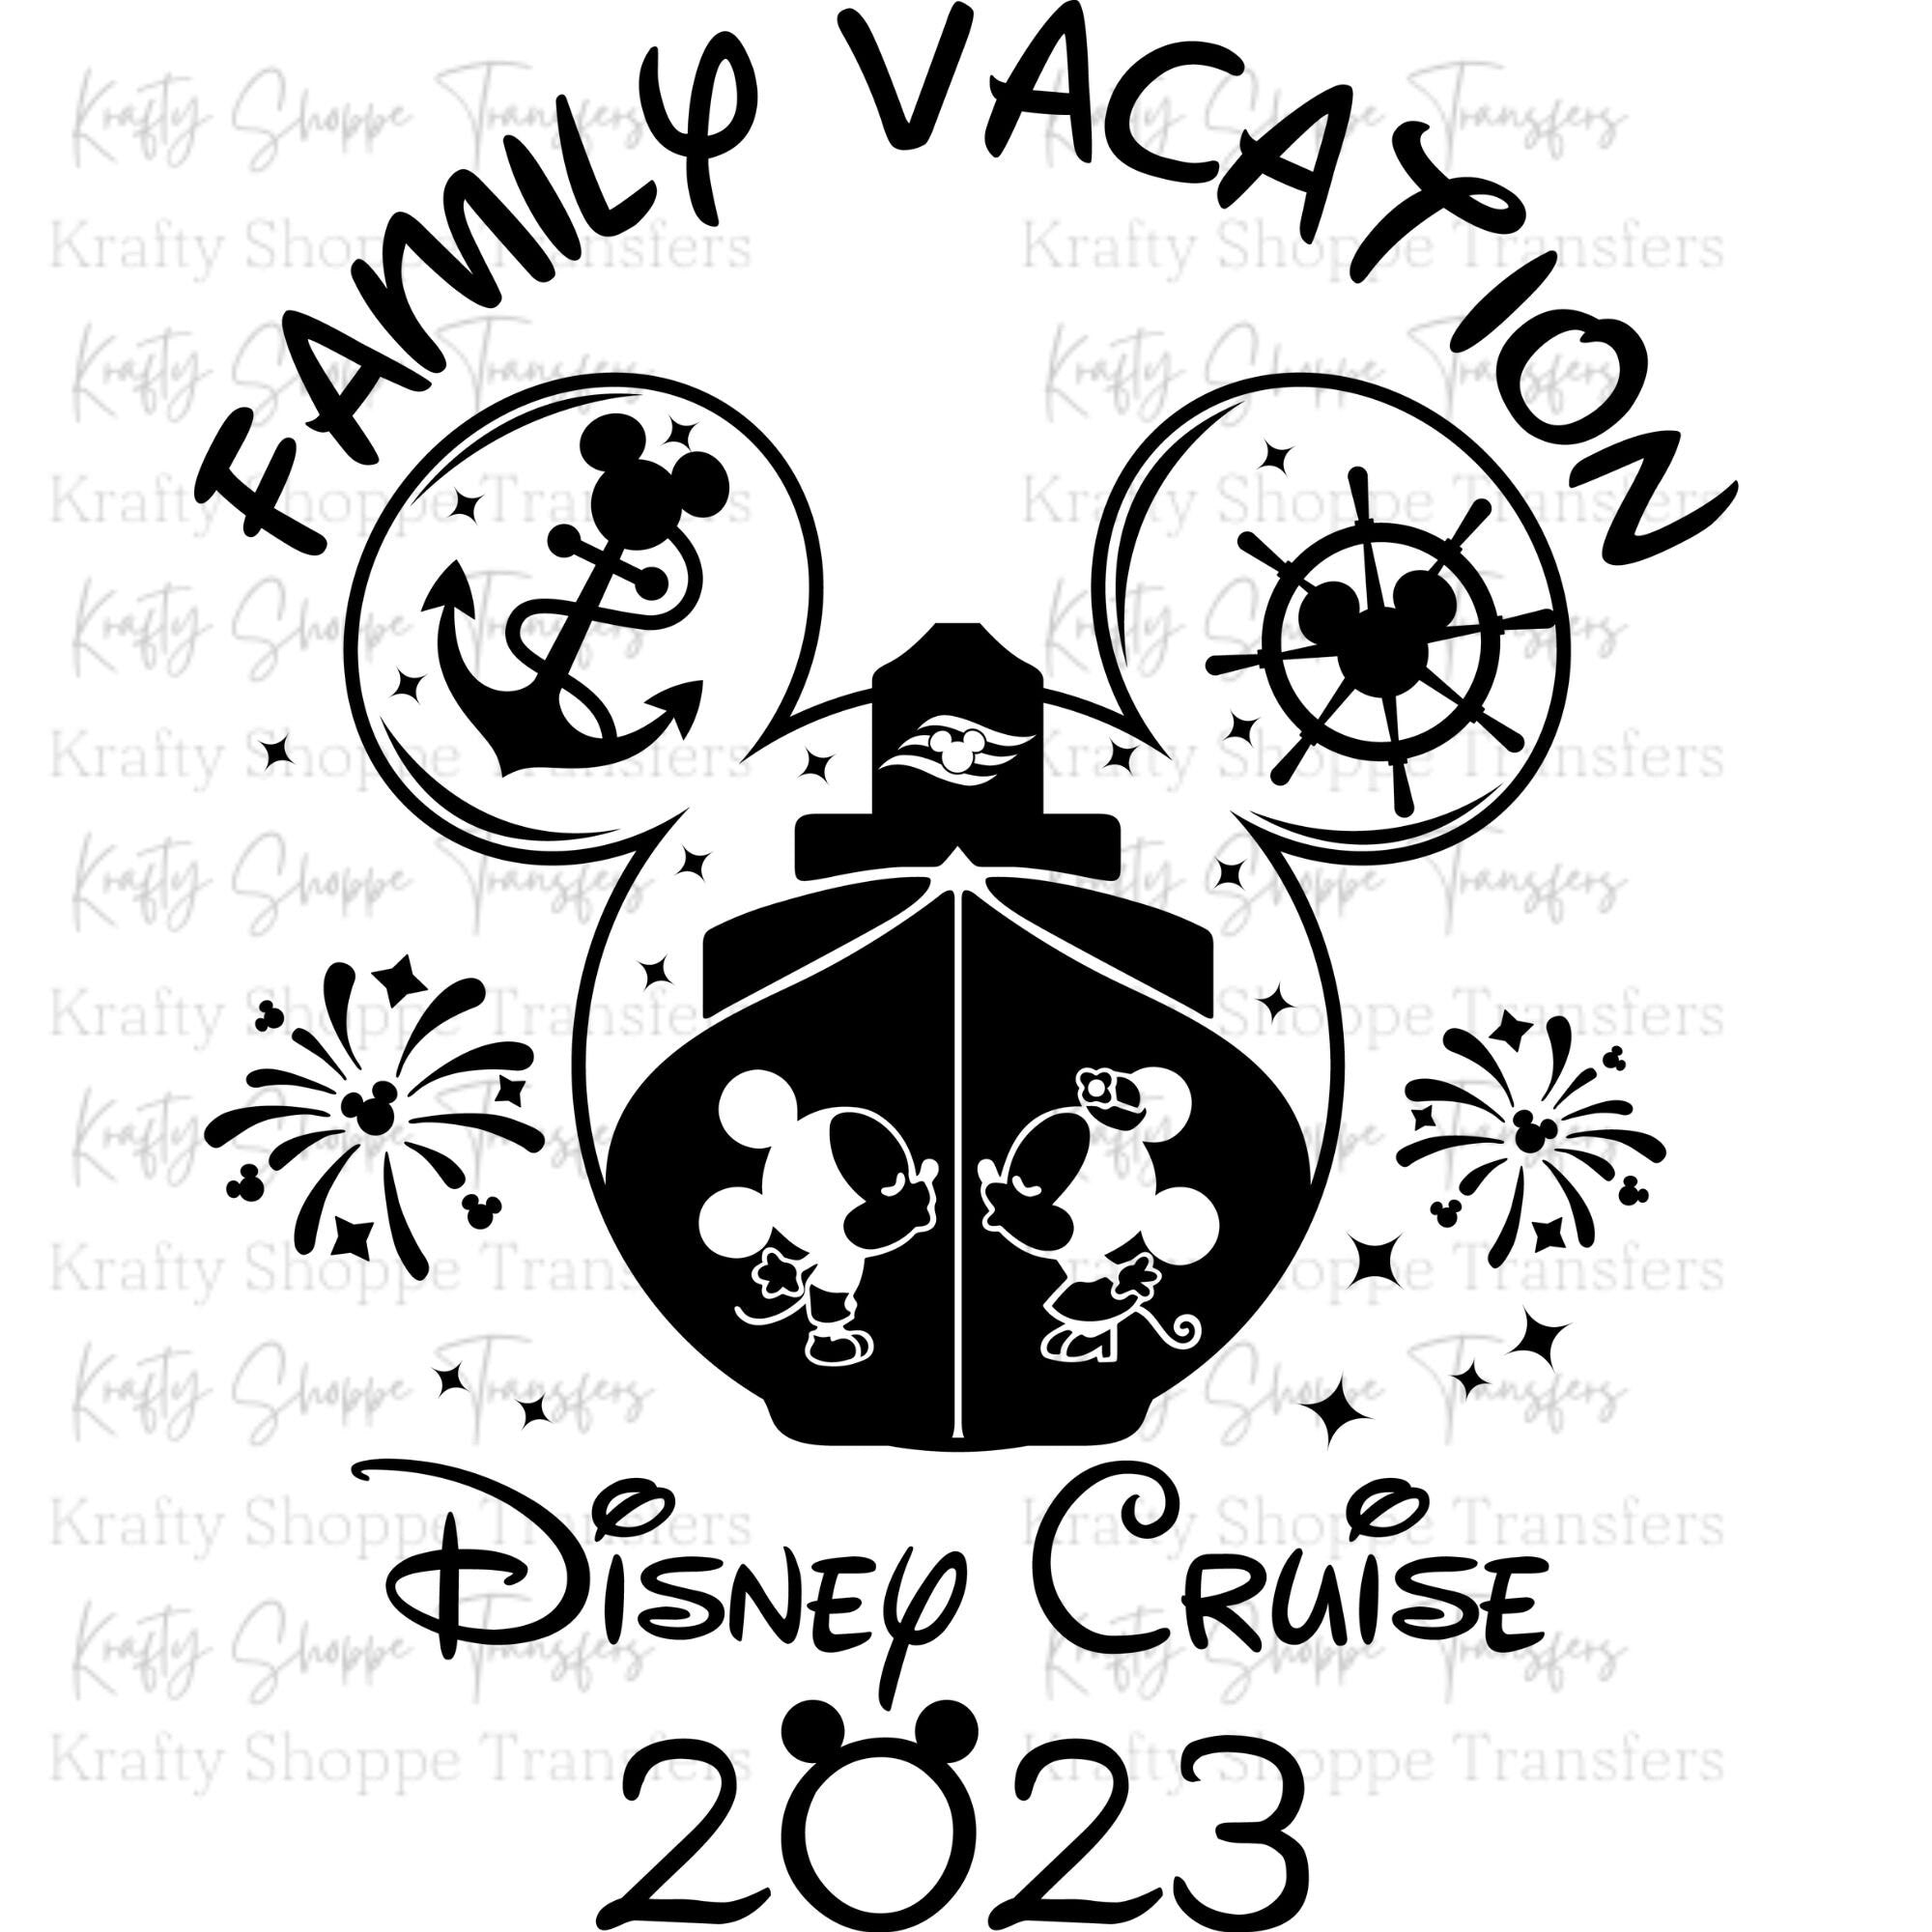 Disney Family Trip 2023 Dtf Transfers Dtf Transfers Dtf -  in 2023